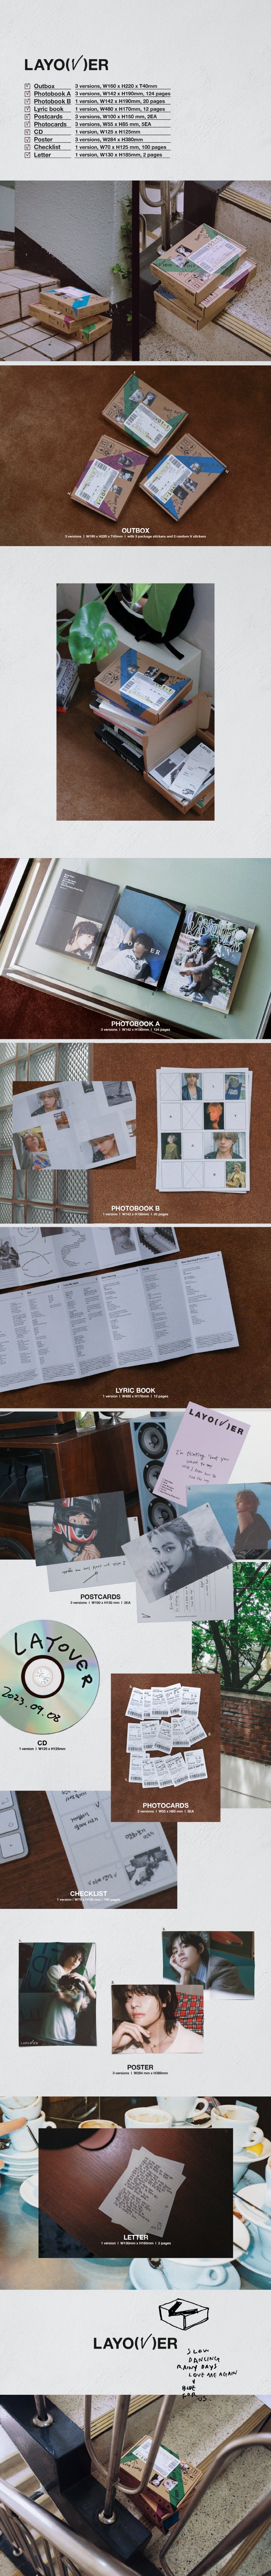 V (BTS) - [Layover] Solo Album Photobook 3 Version SET